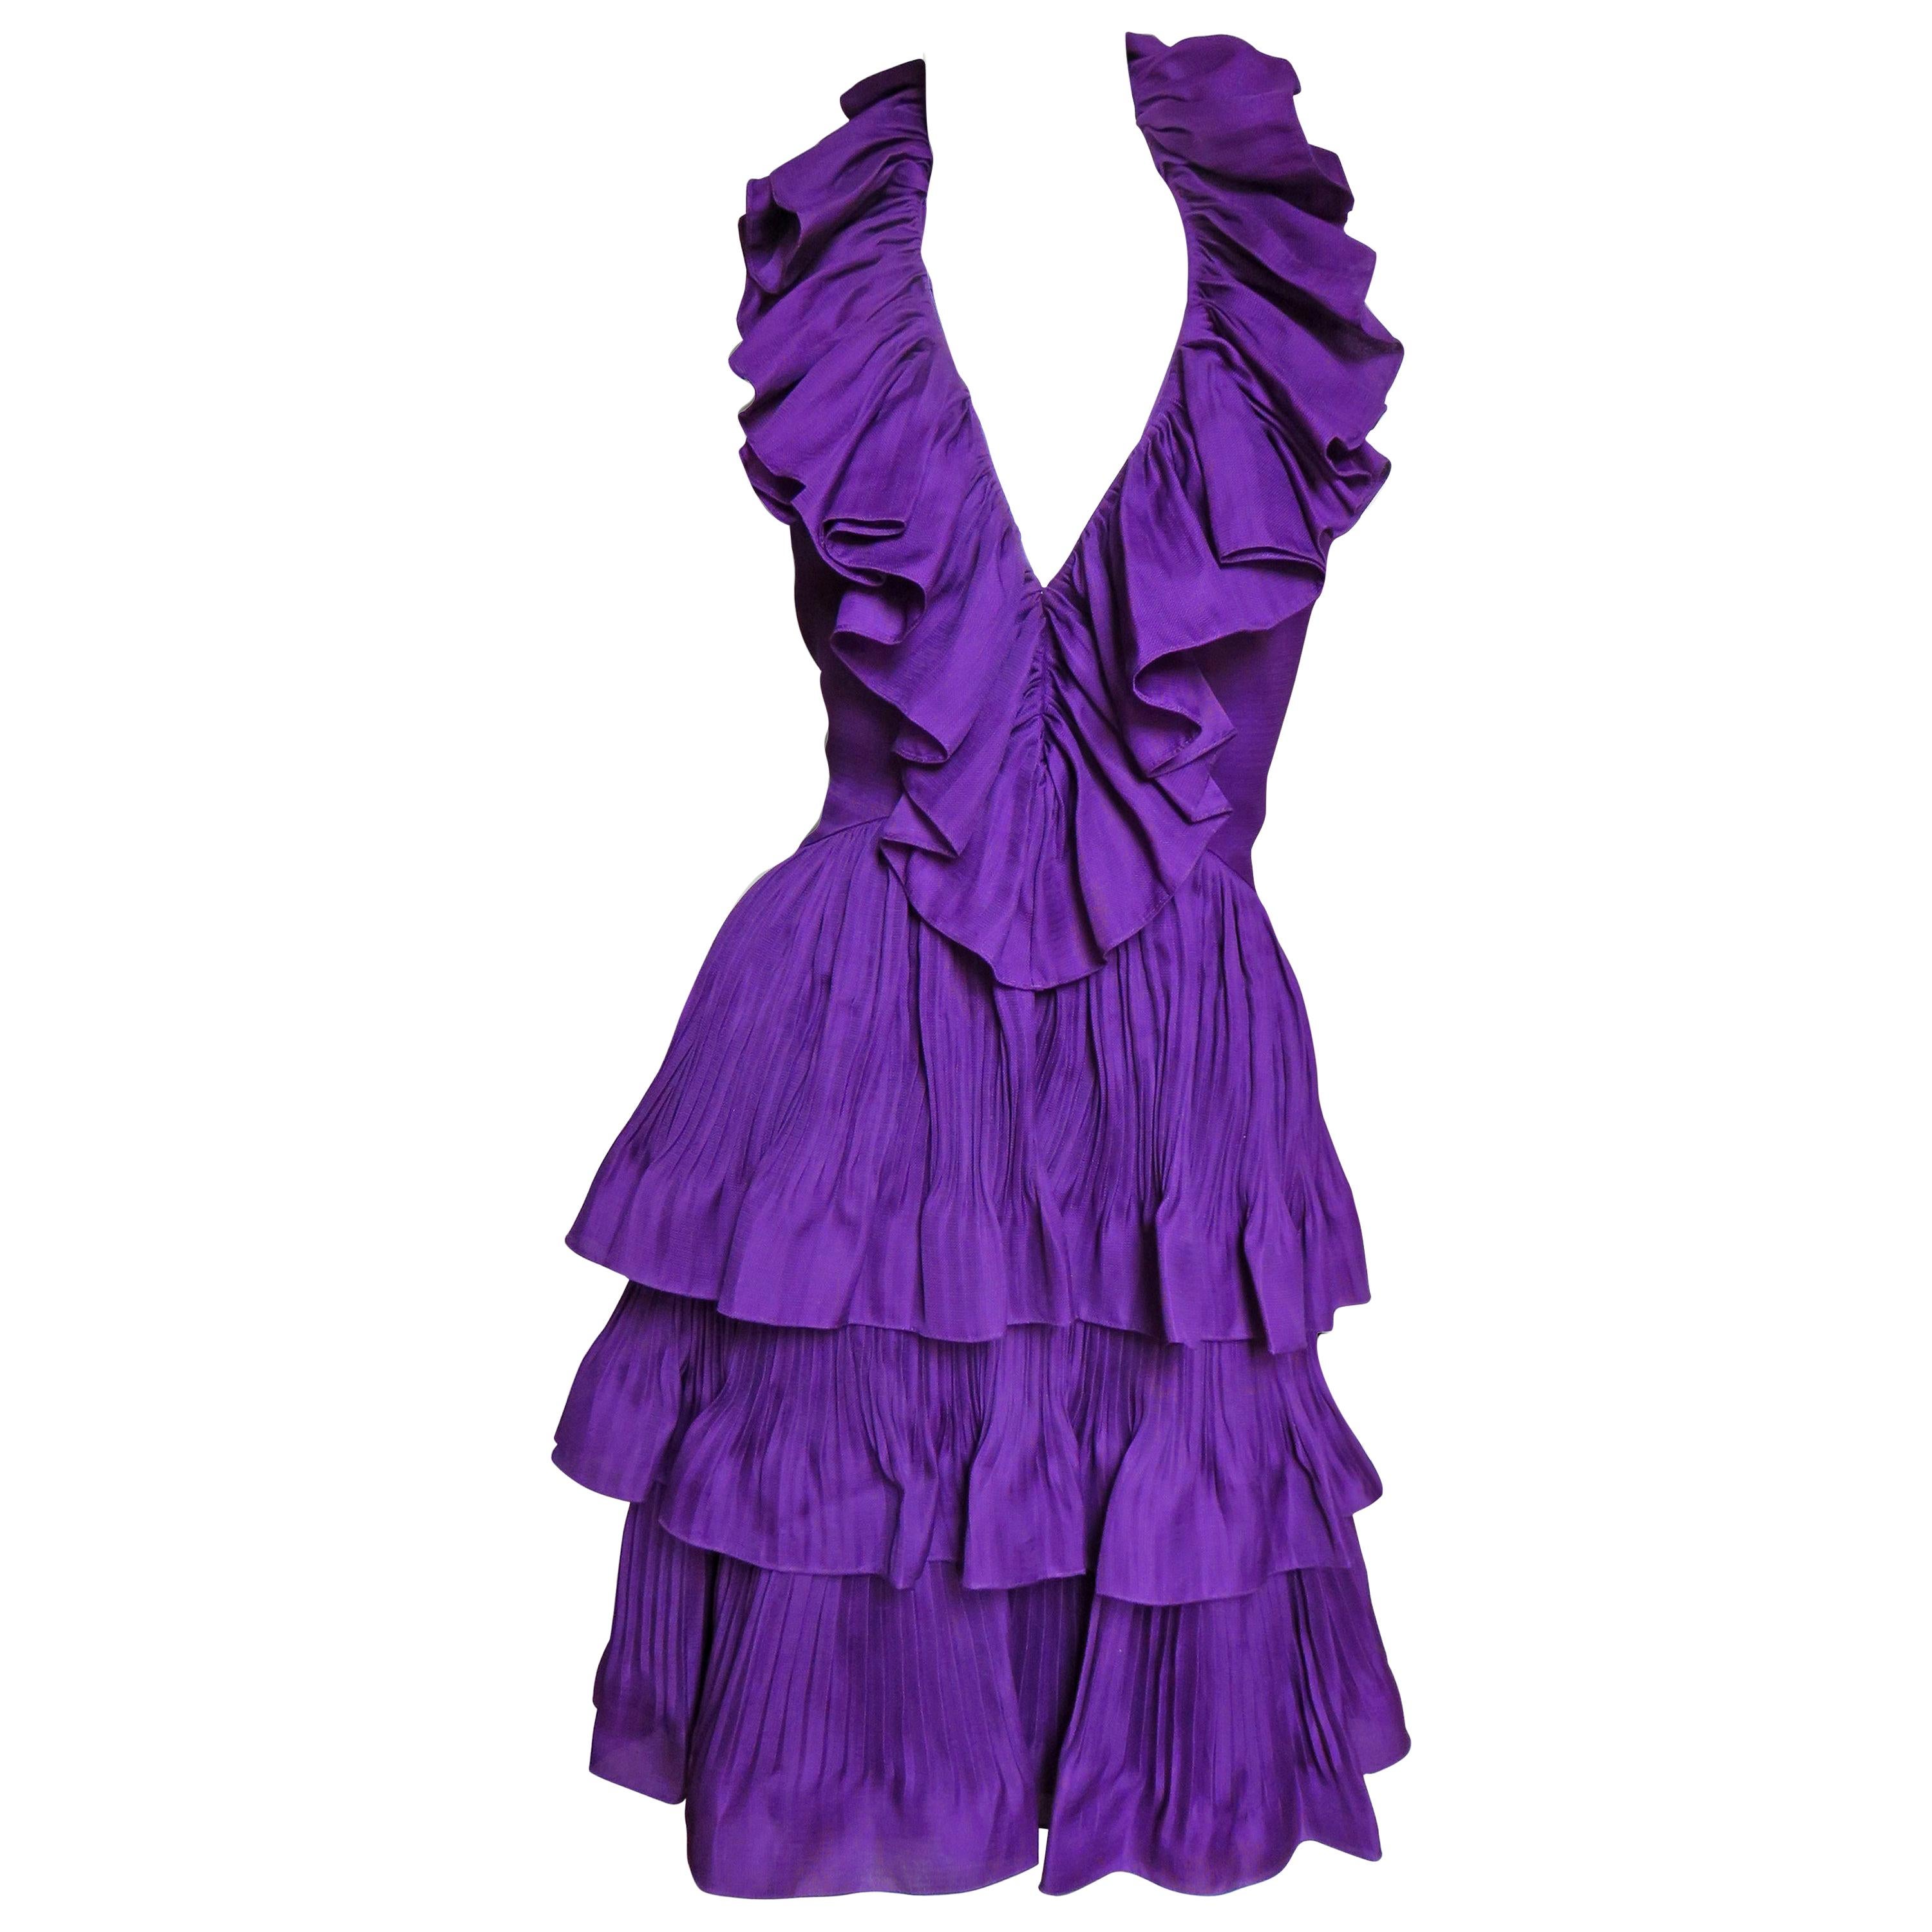 John Galliano for Christian Dior S/S 2009 Silk Halter Dress